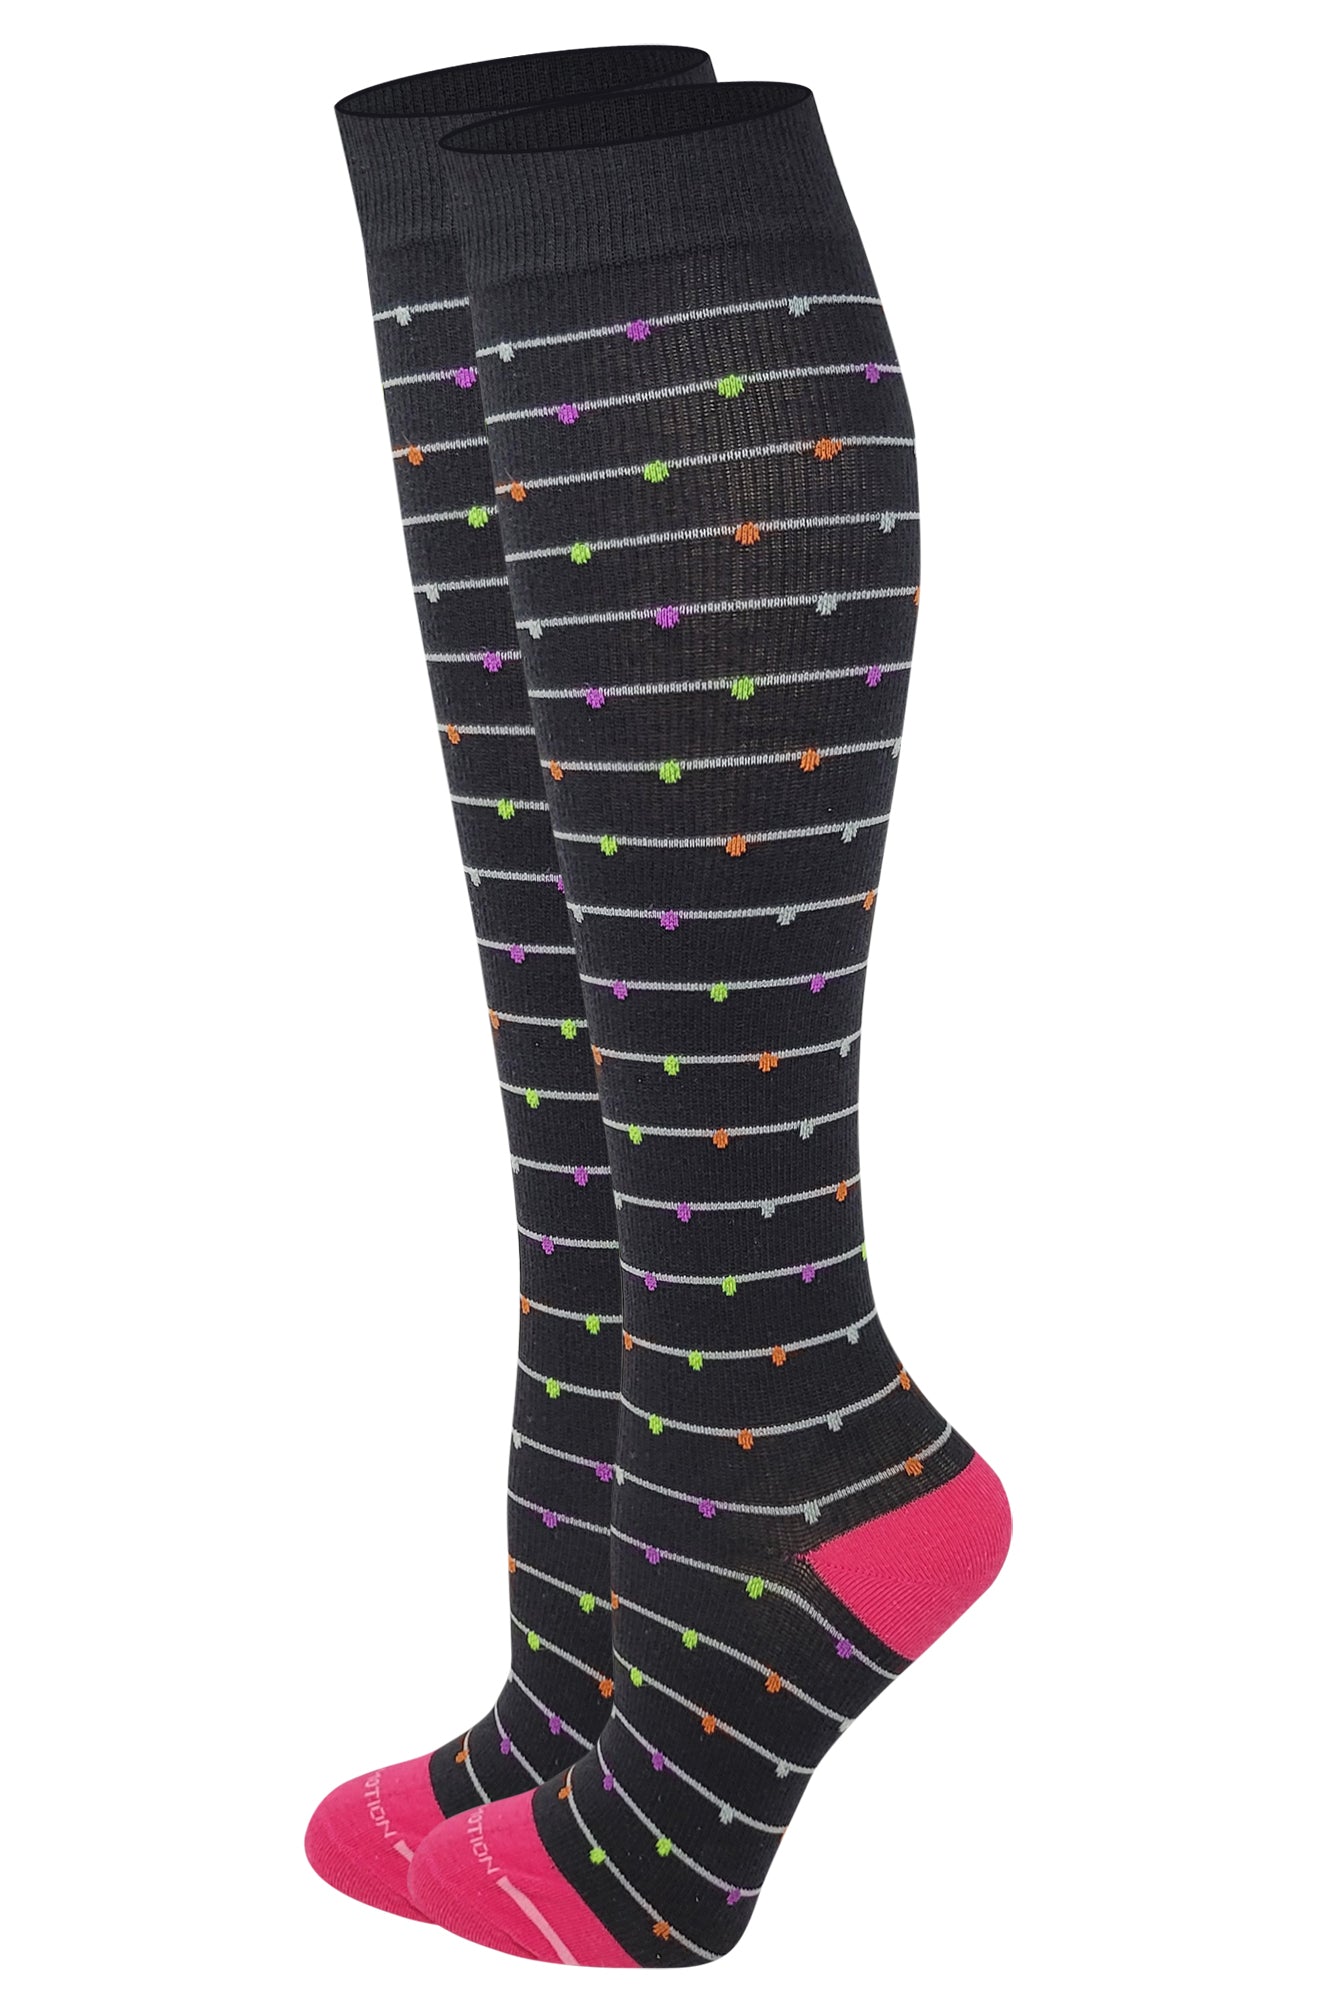 Dr. Motion Women Creative Design Compression Knee high socks